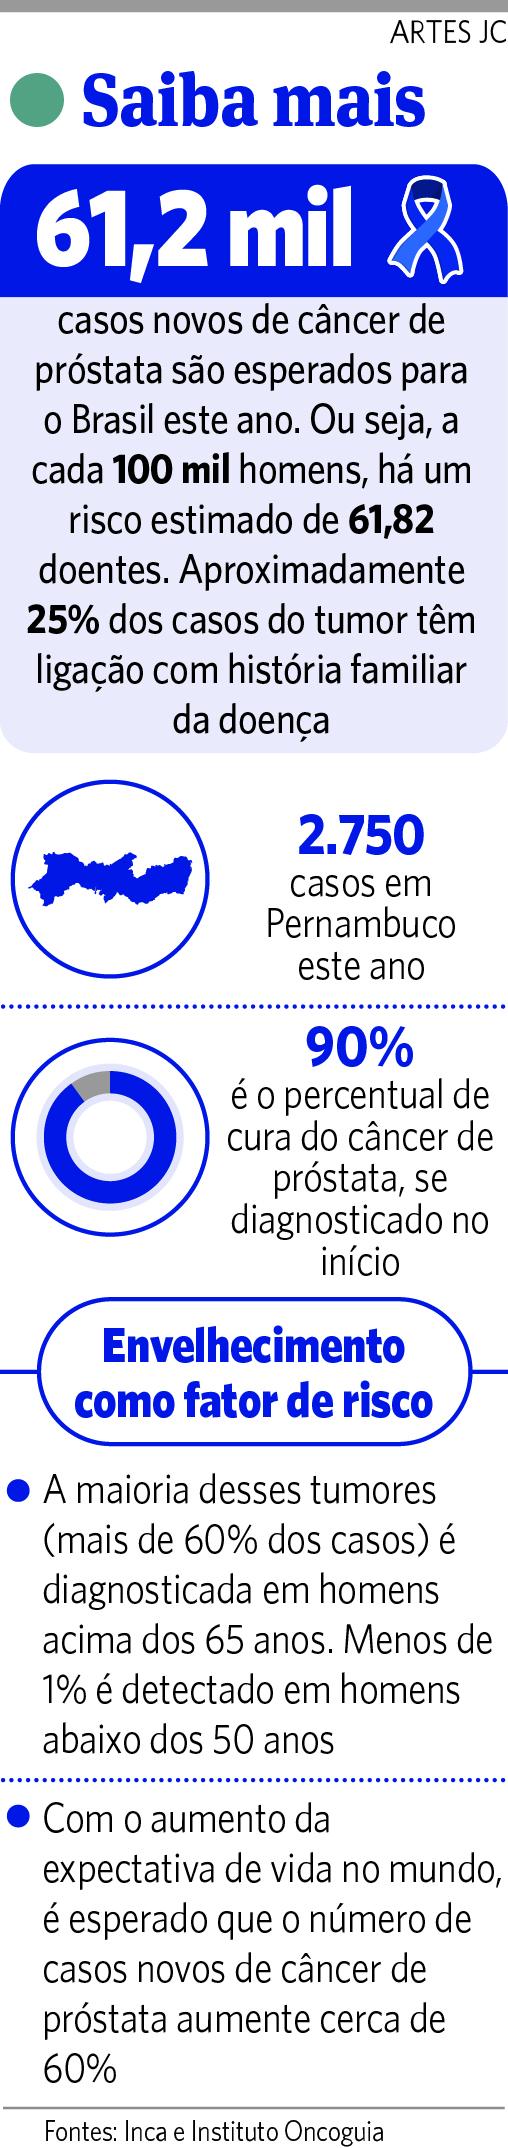 Infográfico - Câncer de Próstata - 09112016